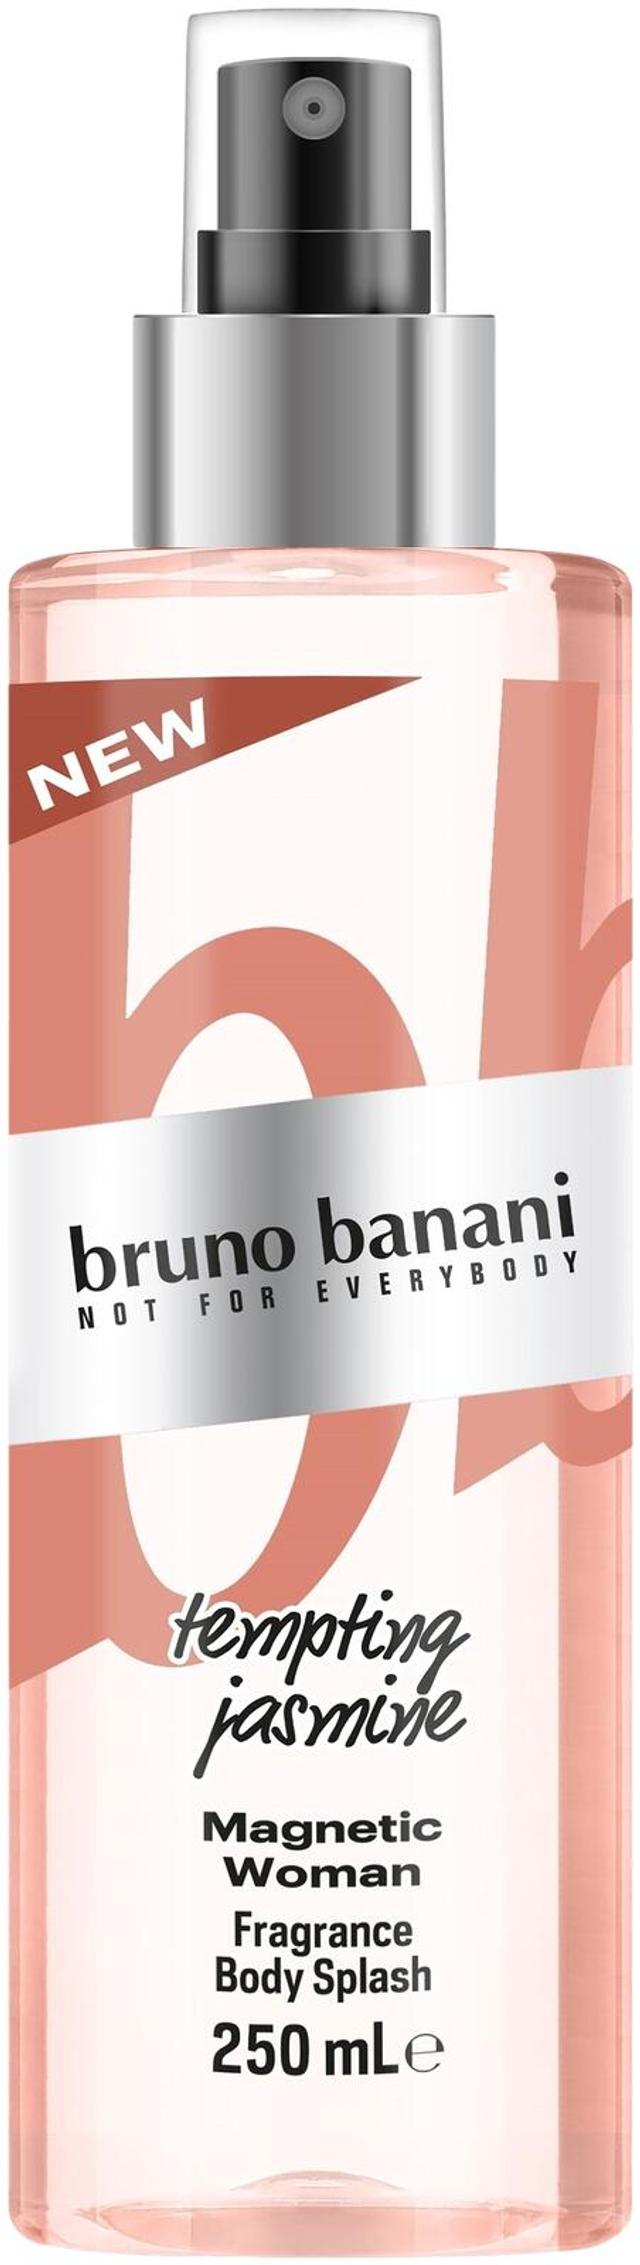 Bruno Banani Magnetic Woman Body Splash 250 ml